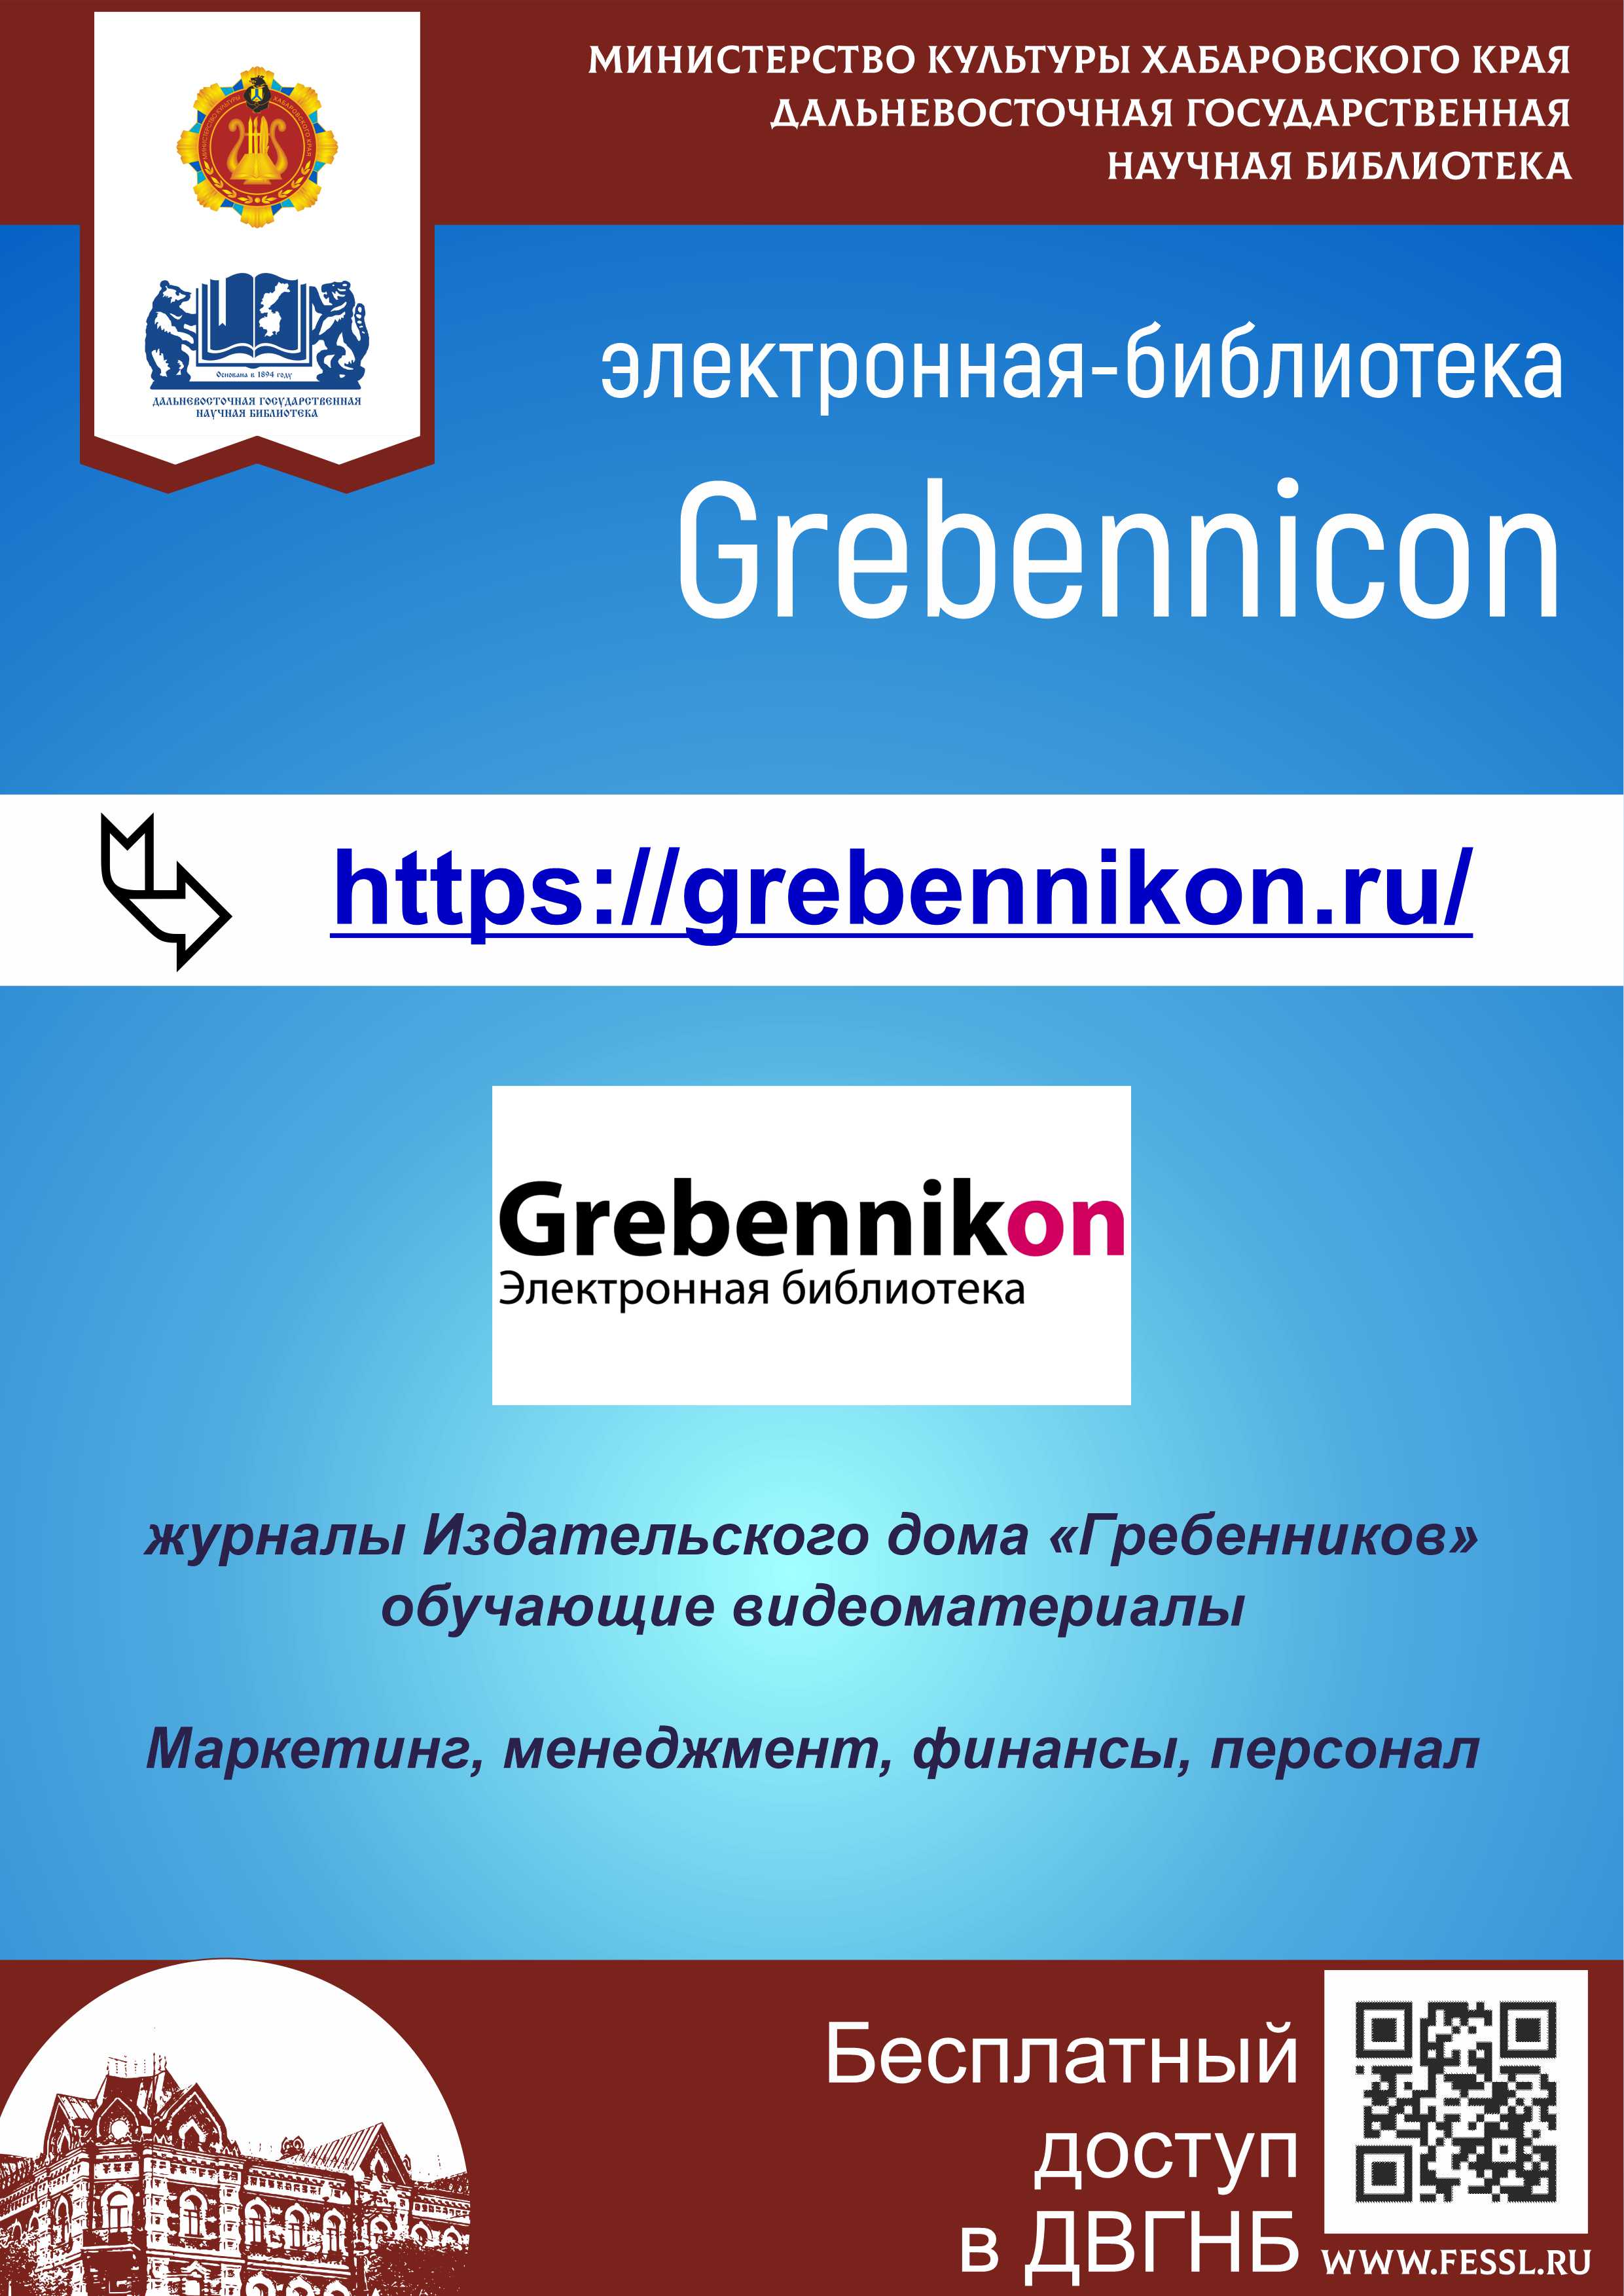 Электронная библиотека Grebennikon